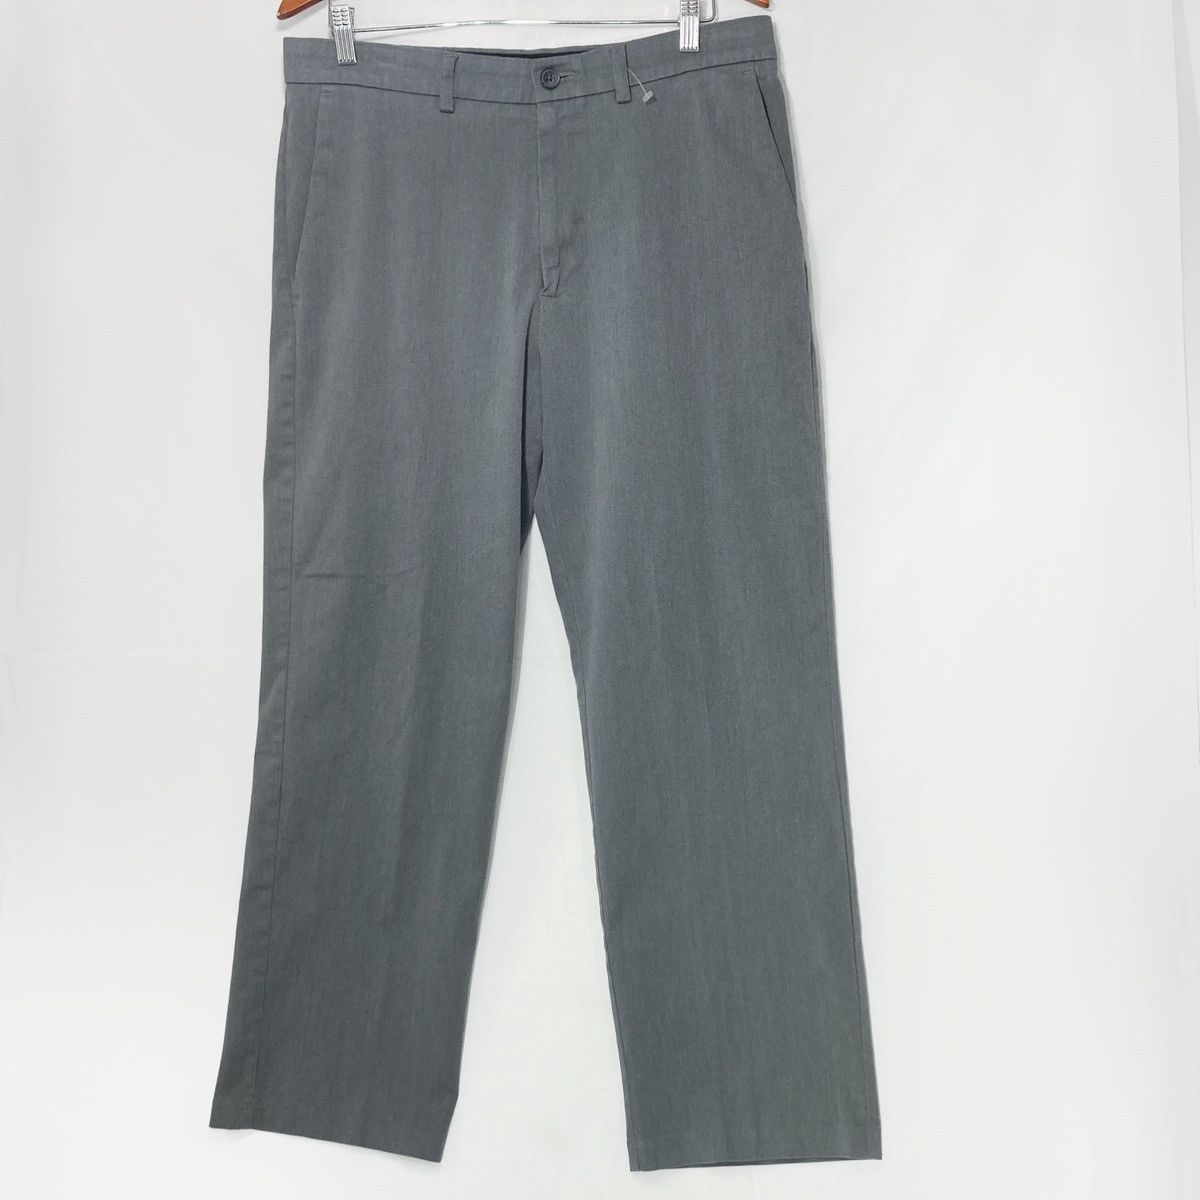 Haggar HAGGAR Men’s Stretch Pants Comfort Expandimatic Classic Fit Size 34R - 1 Preview